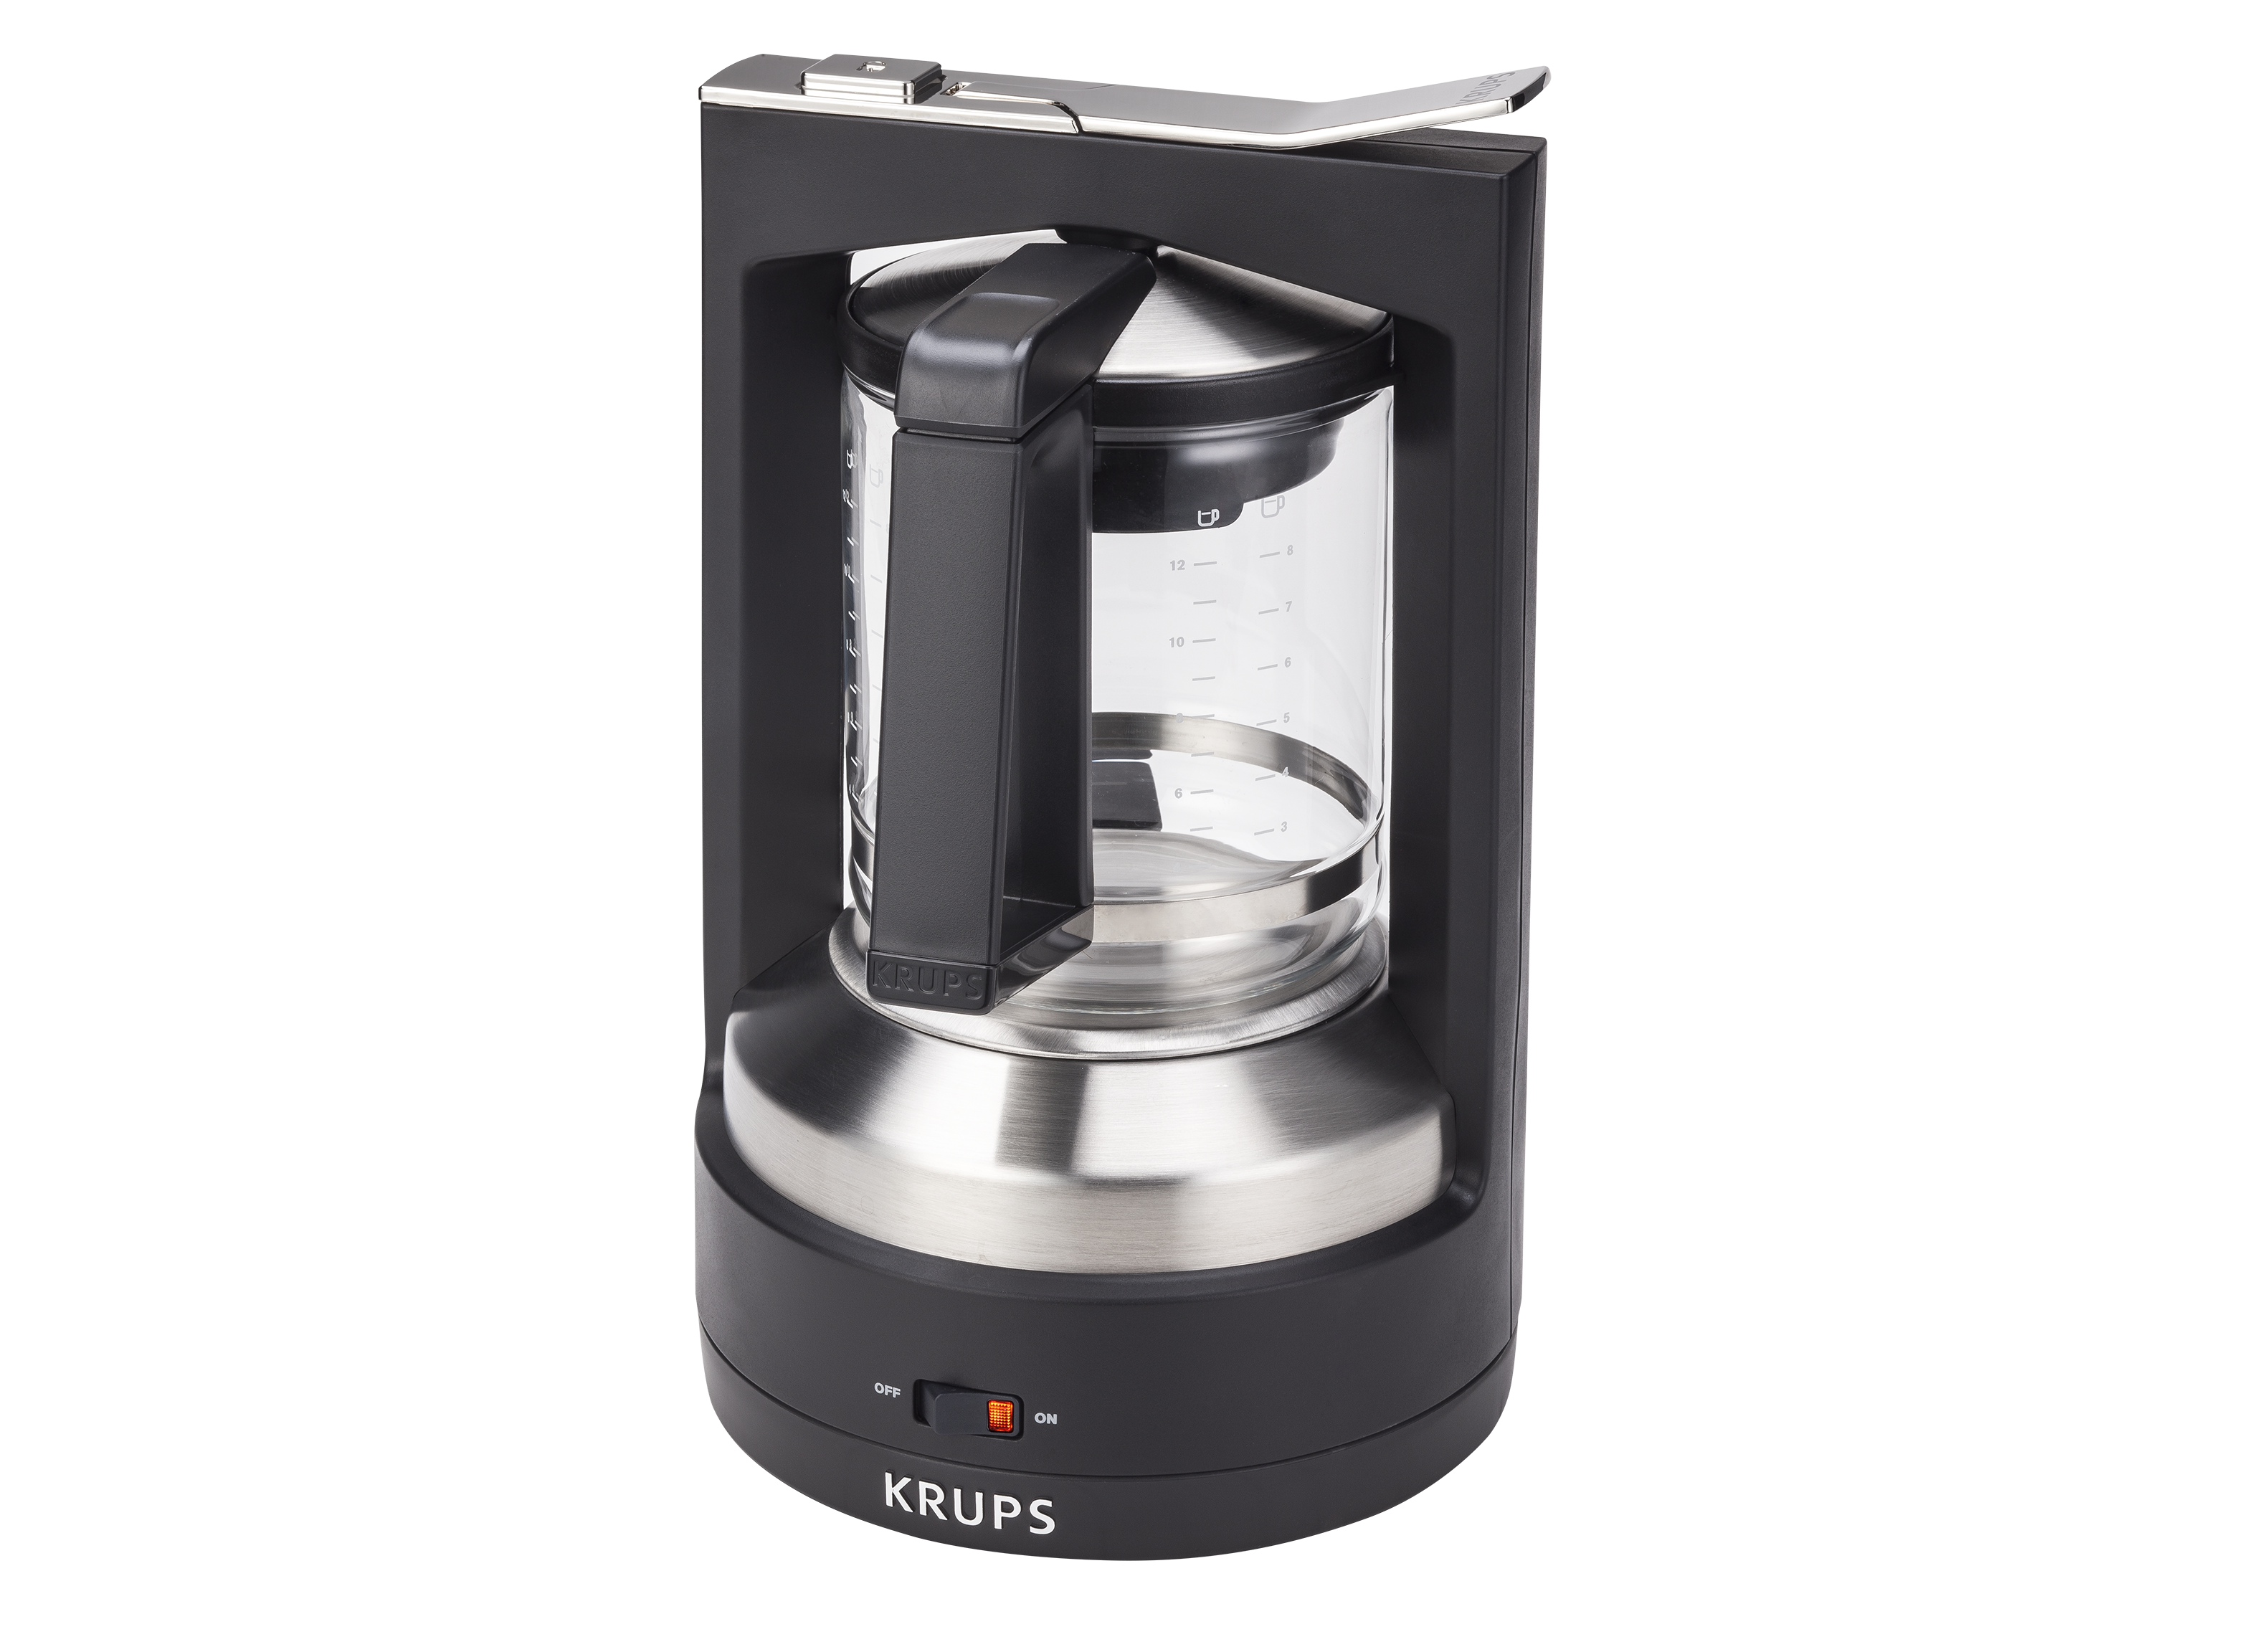 Krups Moka Brew KM4688 Coffee Maker Review - Consumer Reports